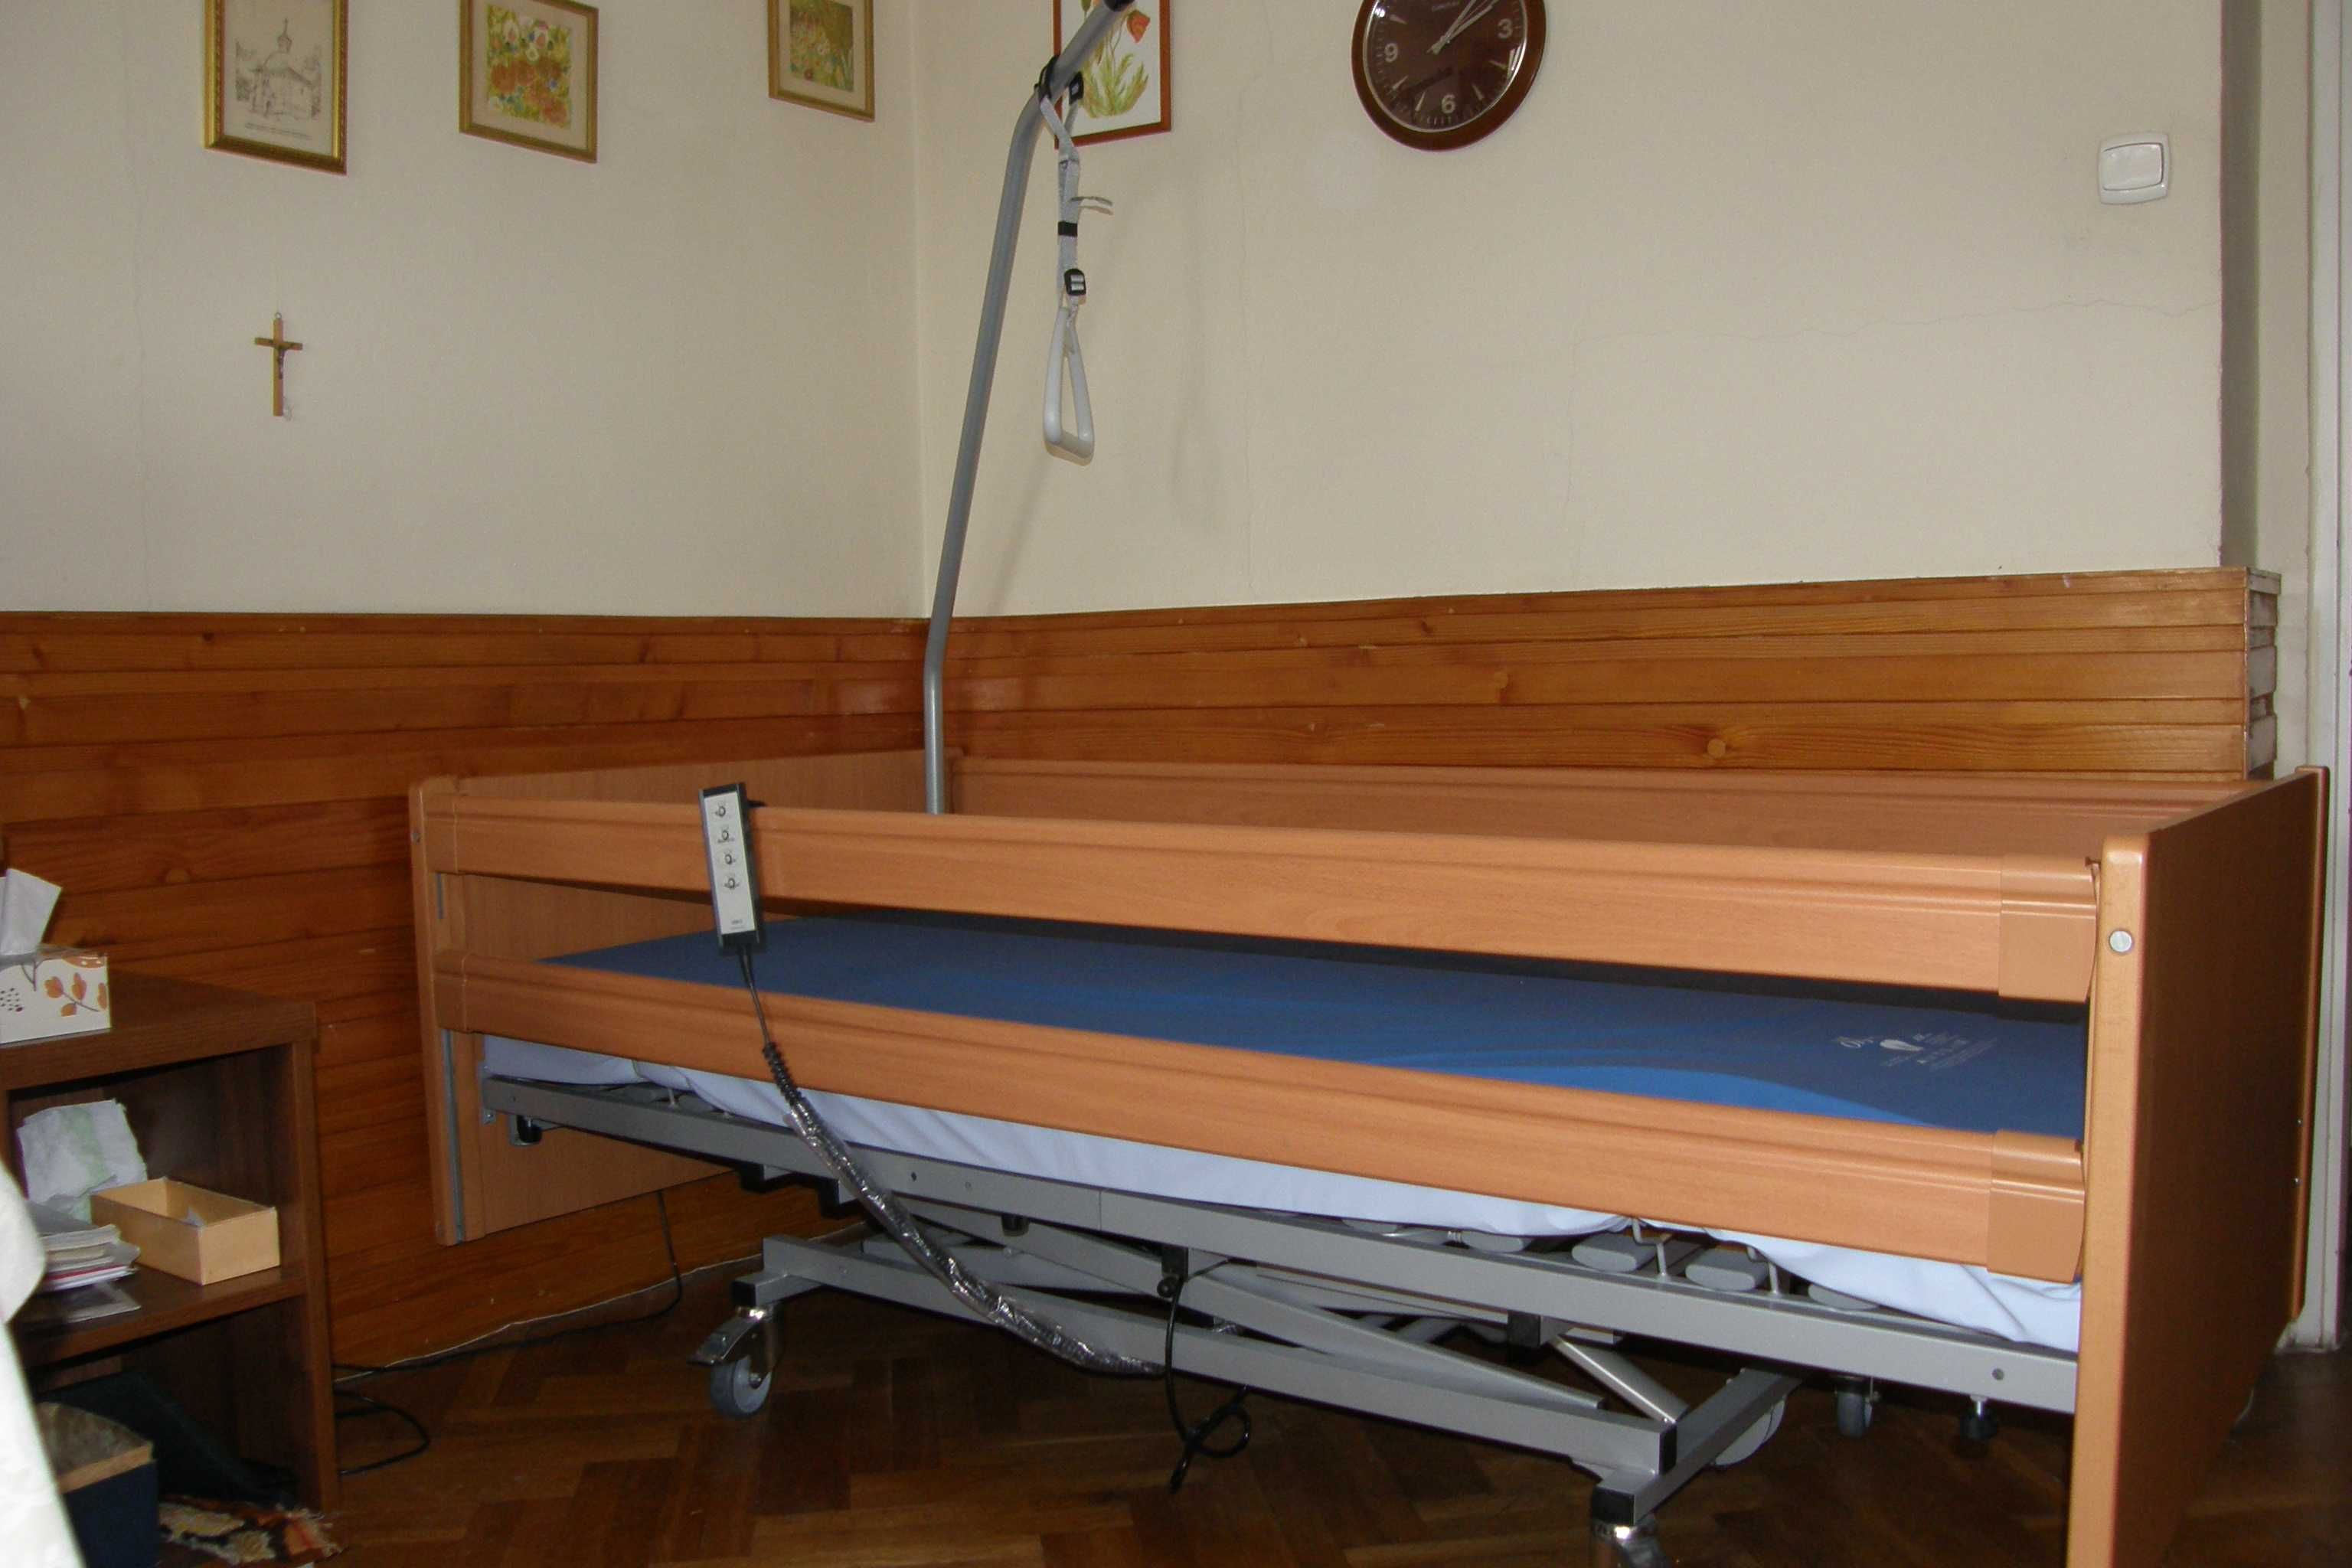 Łóżko rehabilitacyjne ELBUR PB 526 II